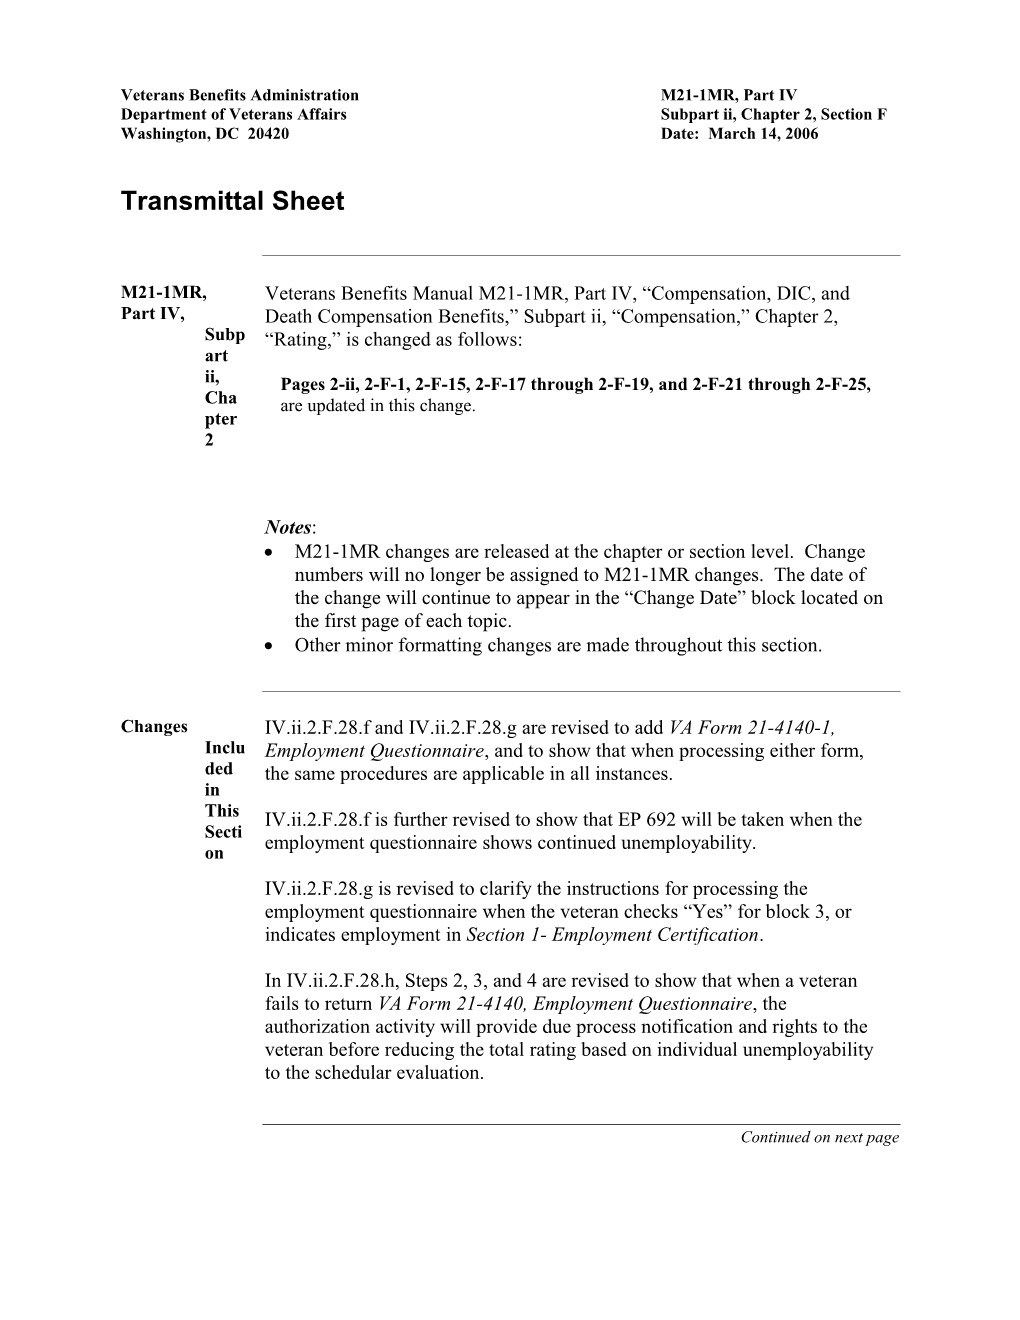 M21-1MR, Part 4, Subptii, Change Document Dated 03/14/06